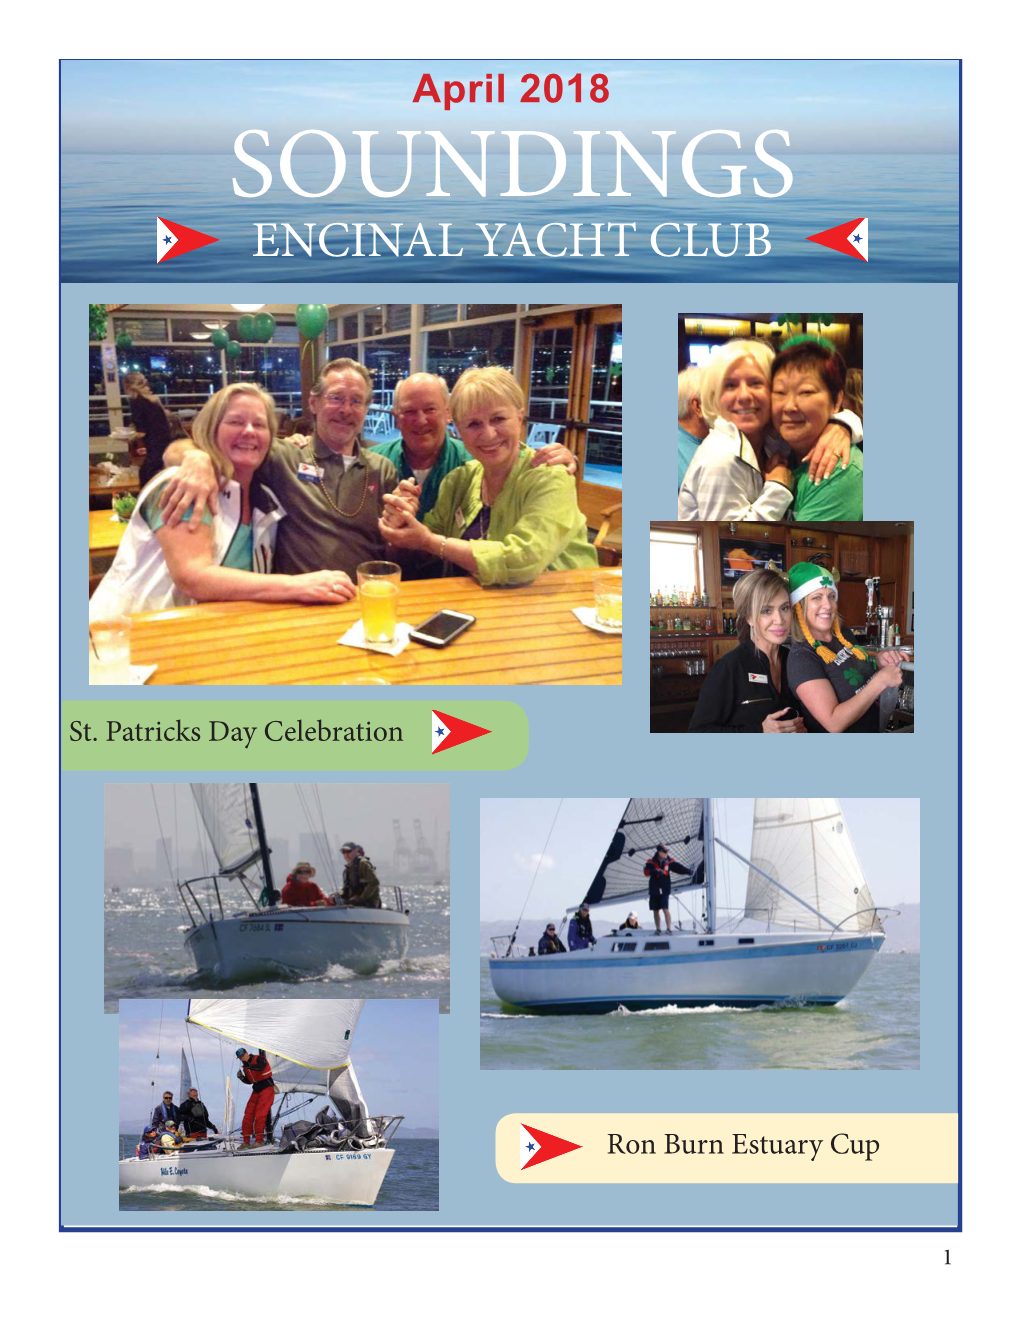 Soundings Encinal Yacht Club